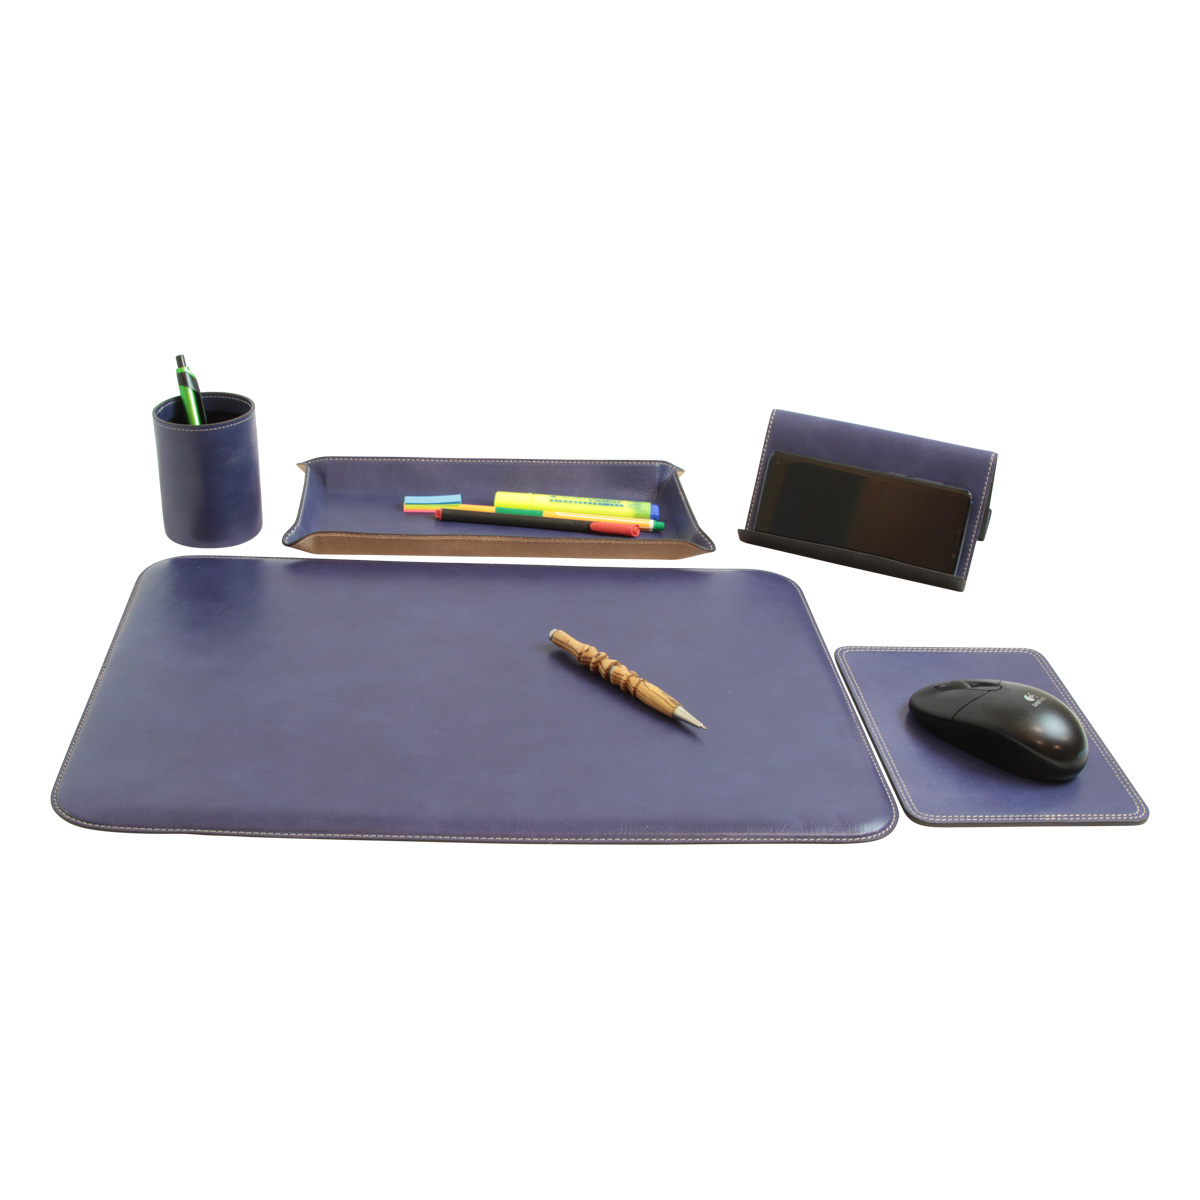 Leather desk kit - 5 pcs  | 769089CB US | Old Angler Firenze